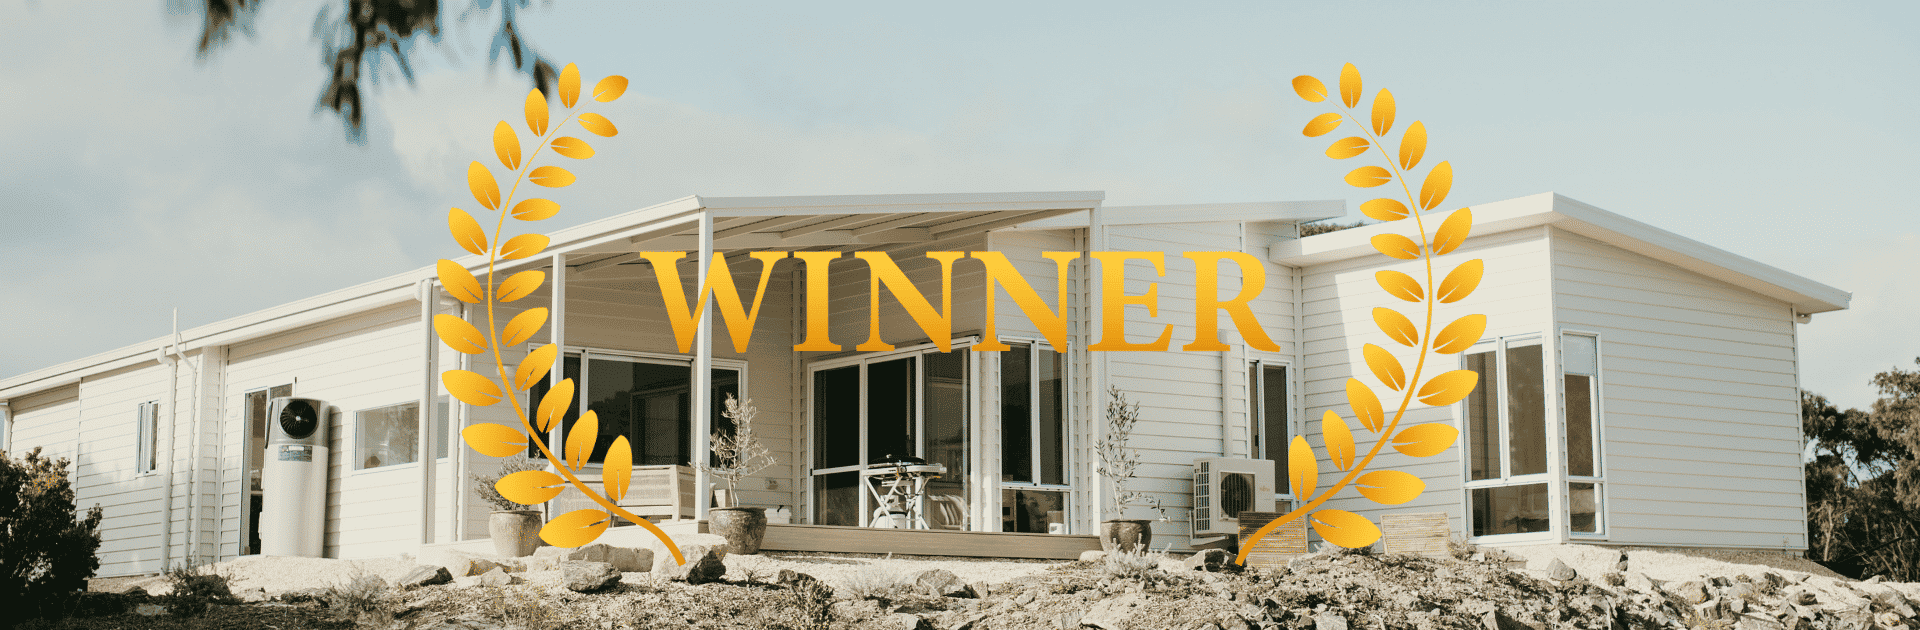 Kit Homes Vs Granny Flats – Who is the Winner?